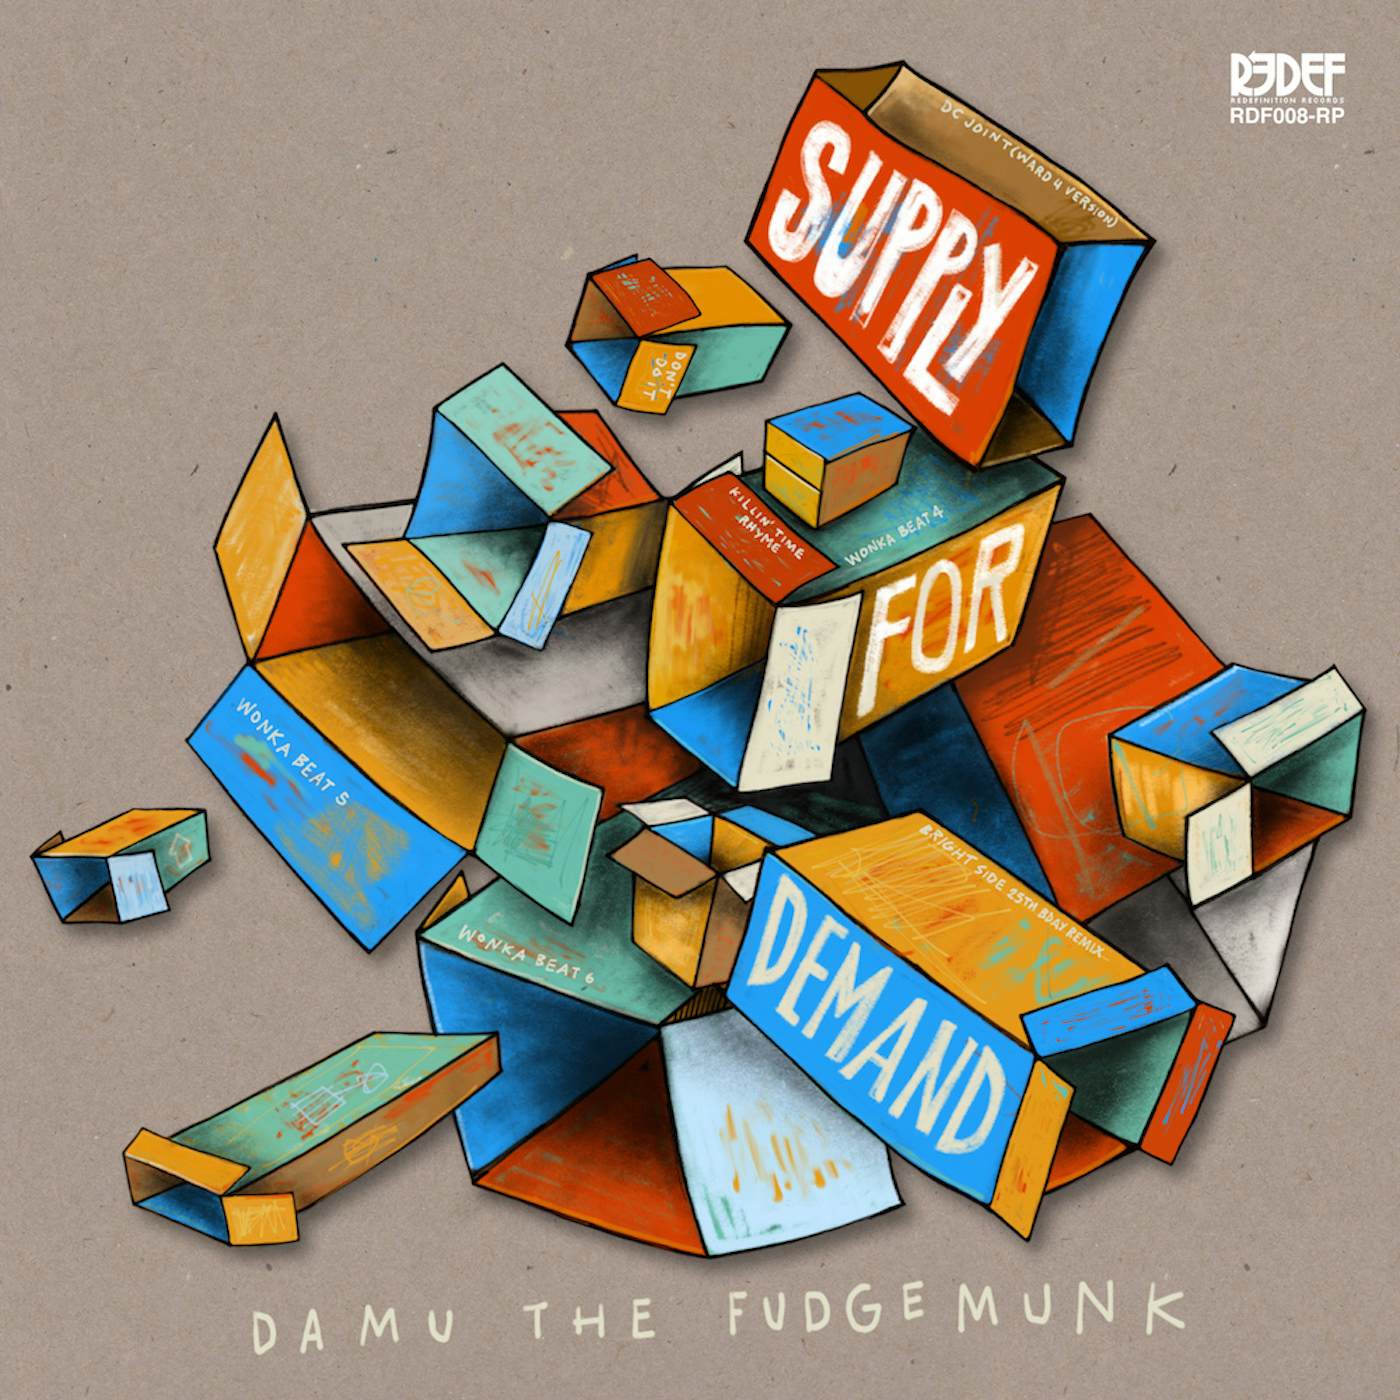 Damu The Fudgemunk Supply For Demand Vinyl Record